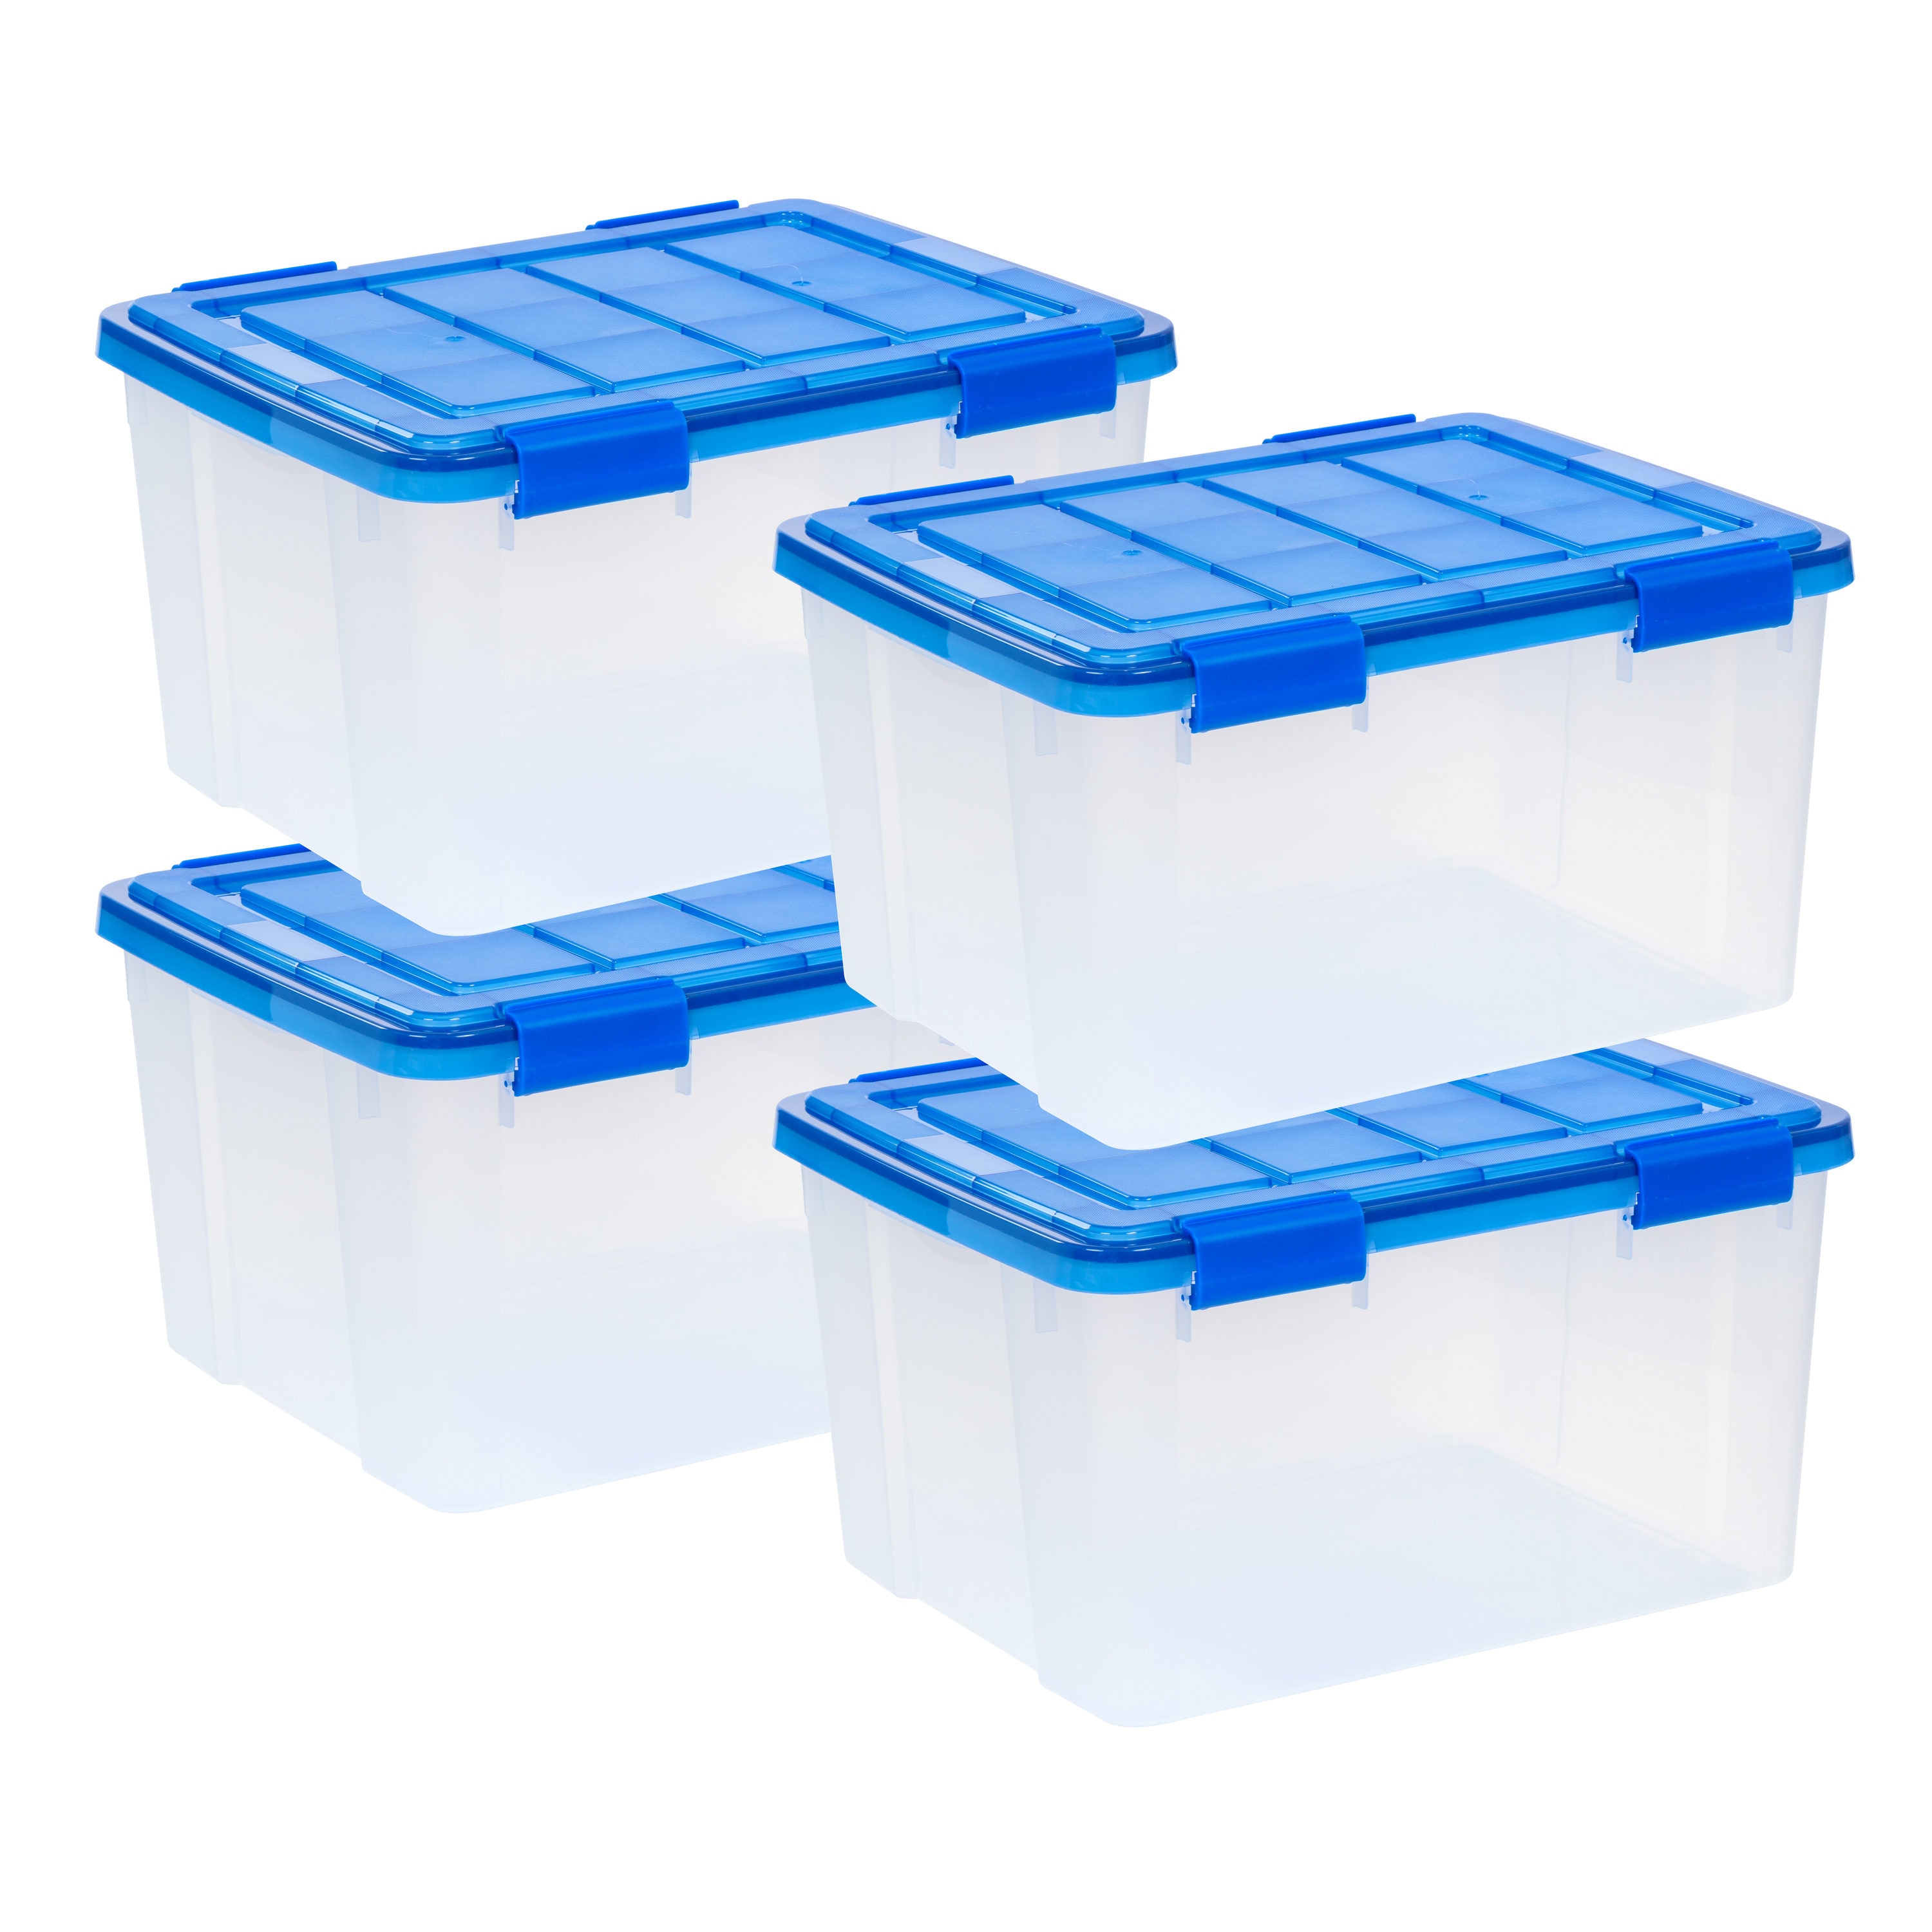 40 Qt. EZ Carry Plastic Storage Tote Container 6pack Organizer Bin